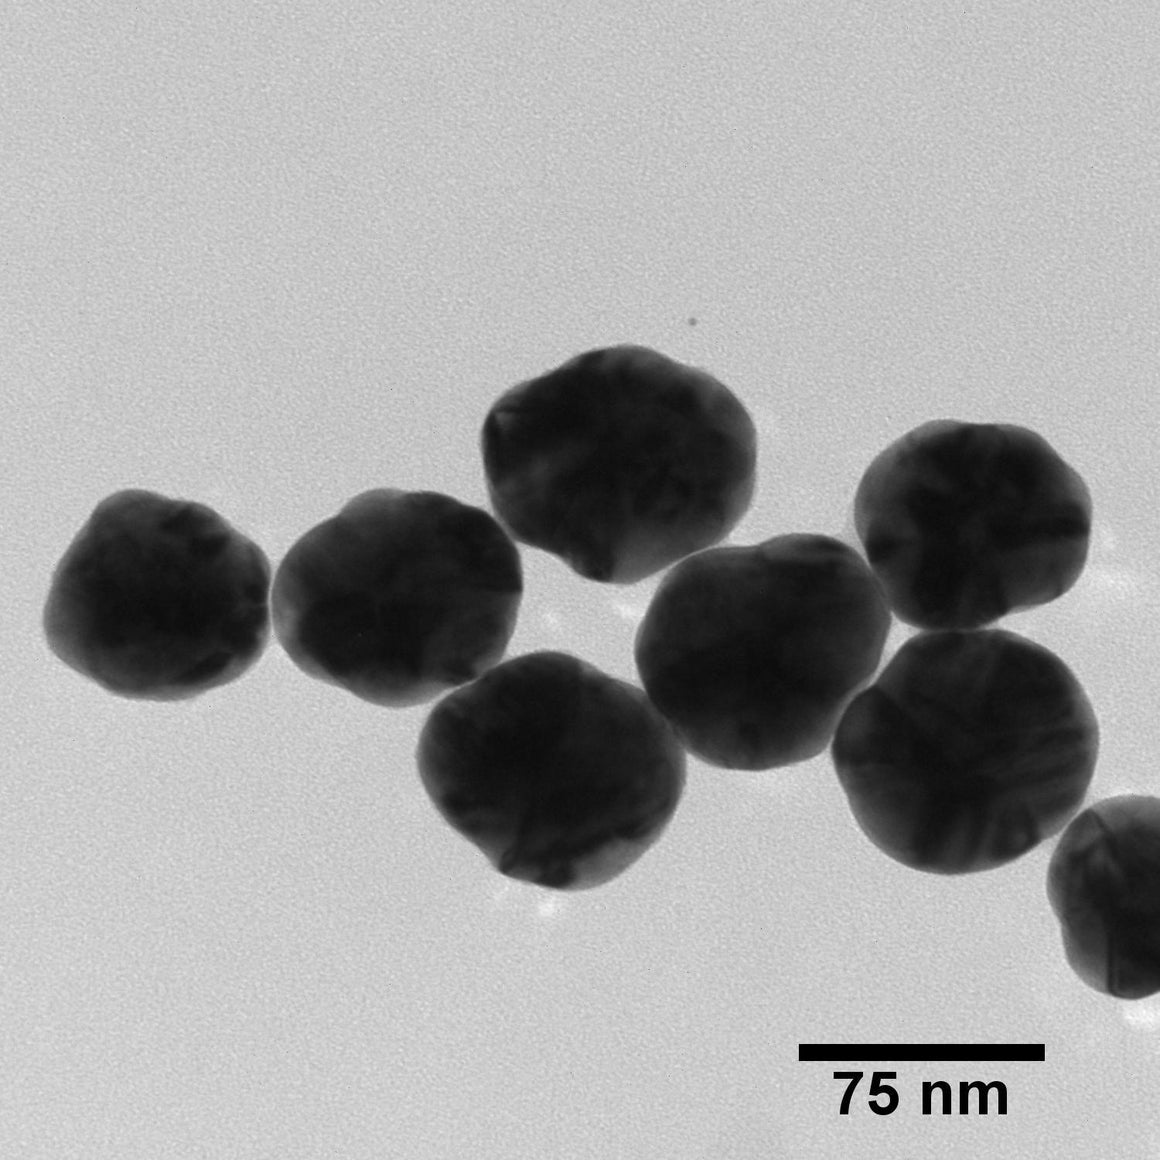 BioPure Silver Nanospheres – Bare (Citrate)